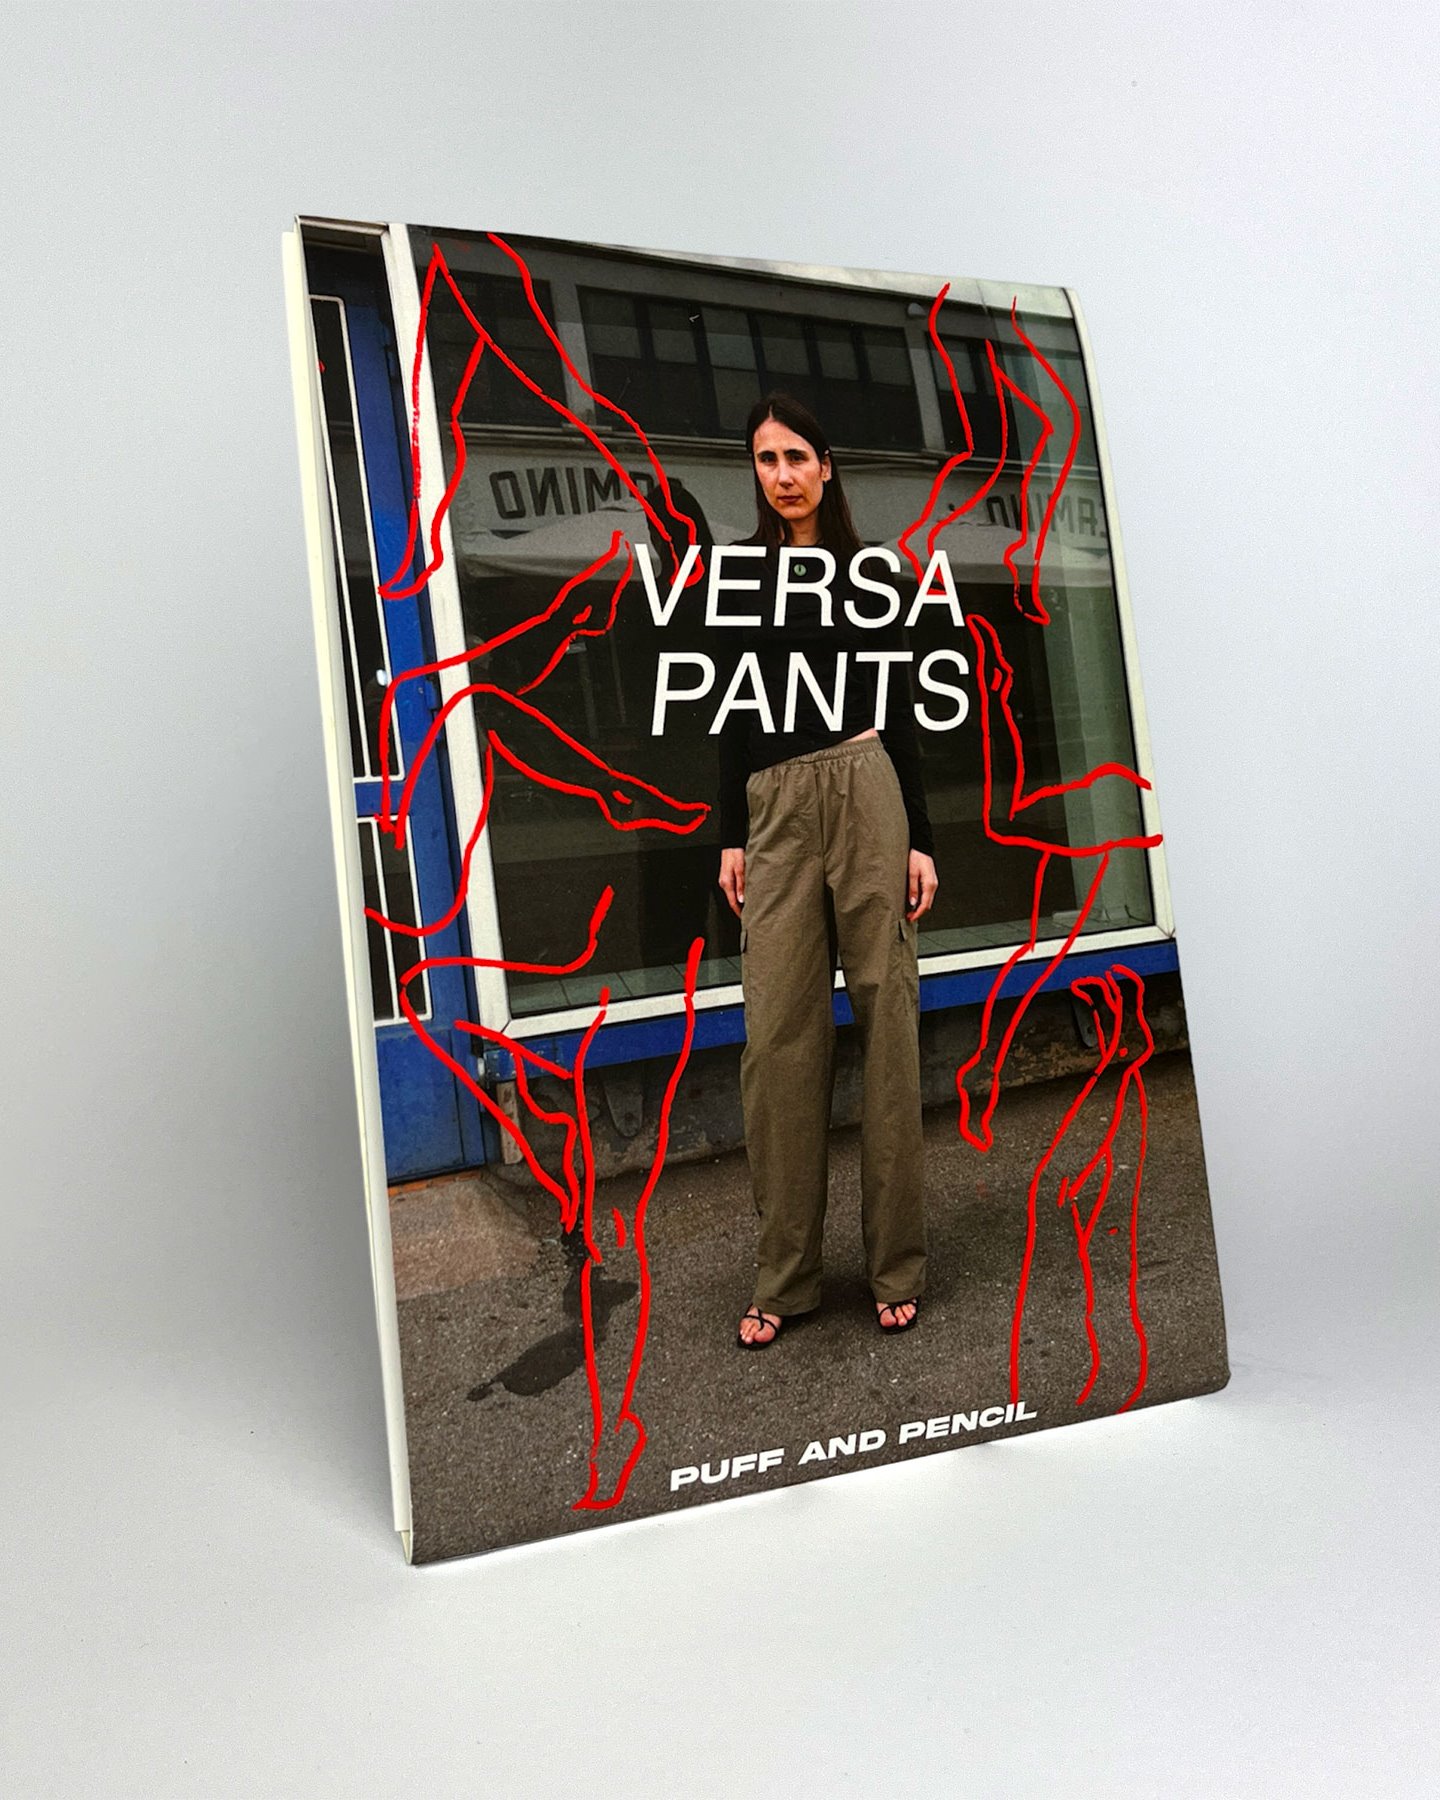 Puff and Pencil Schnittmuster "Versa pants" 1100304_pack.jpg